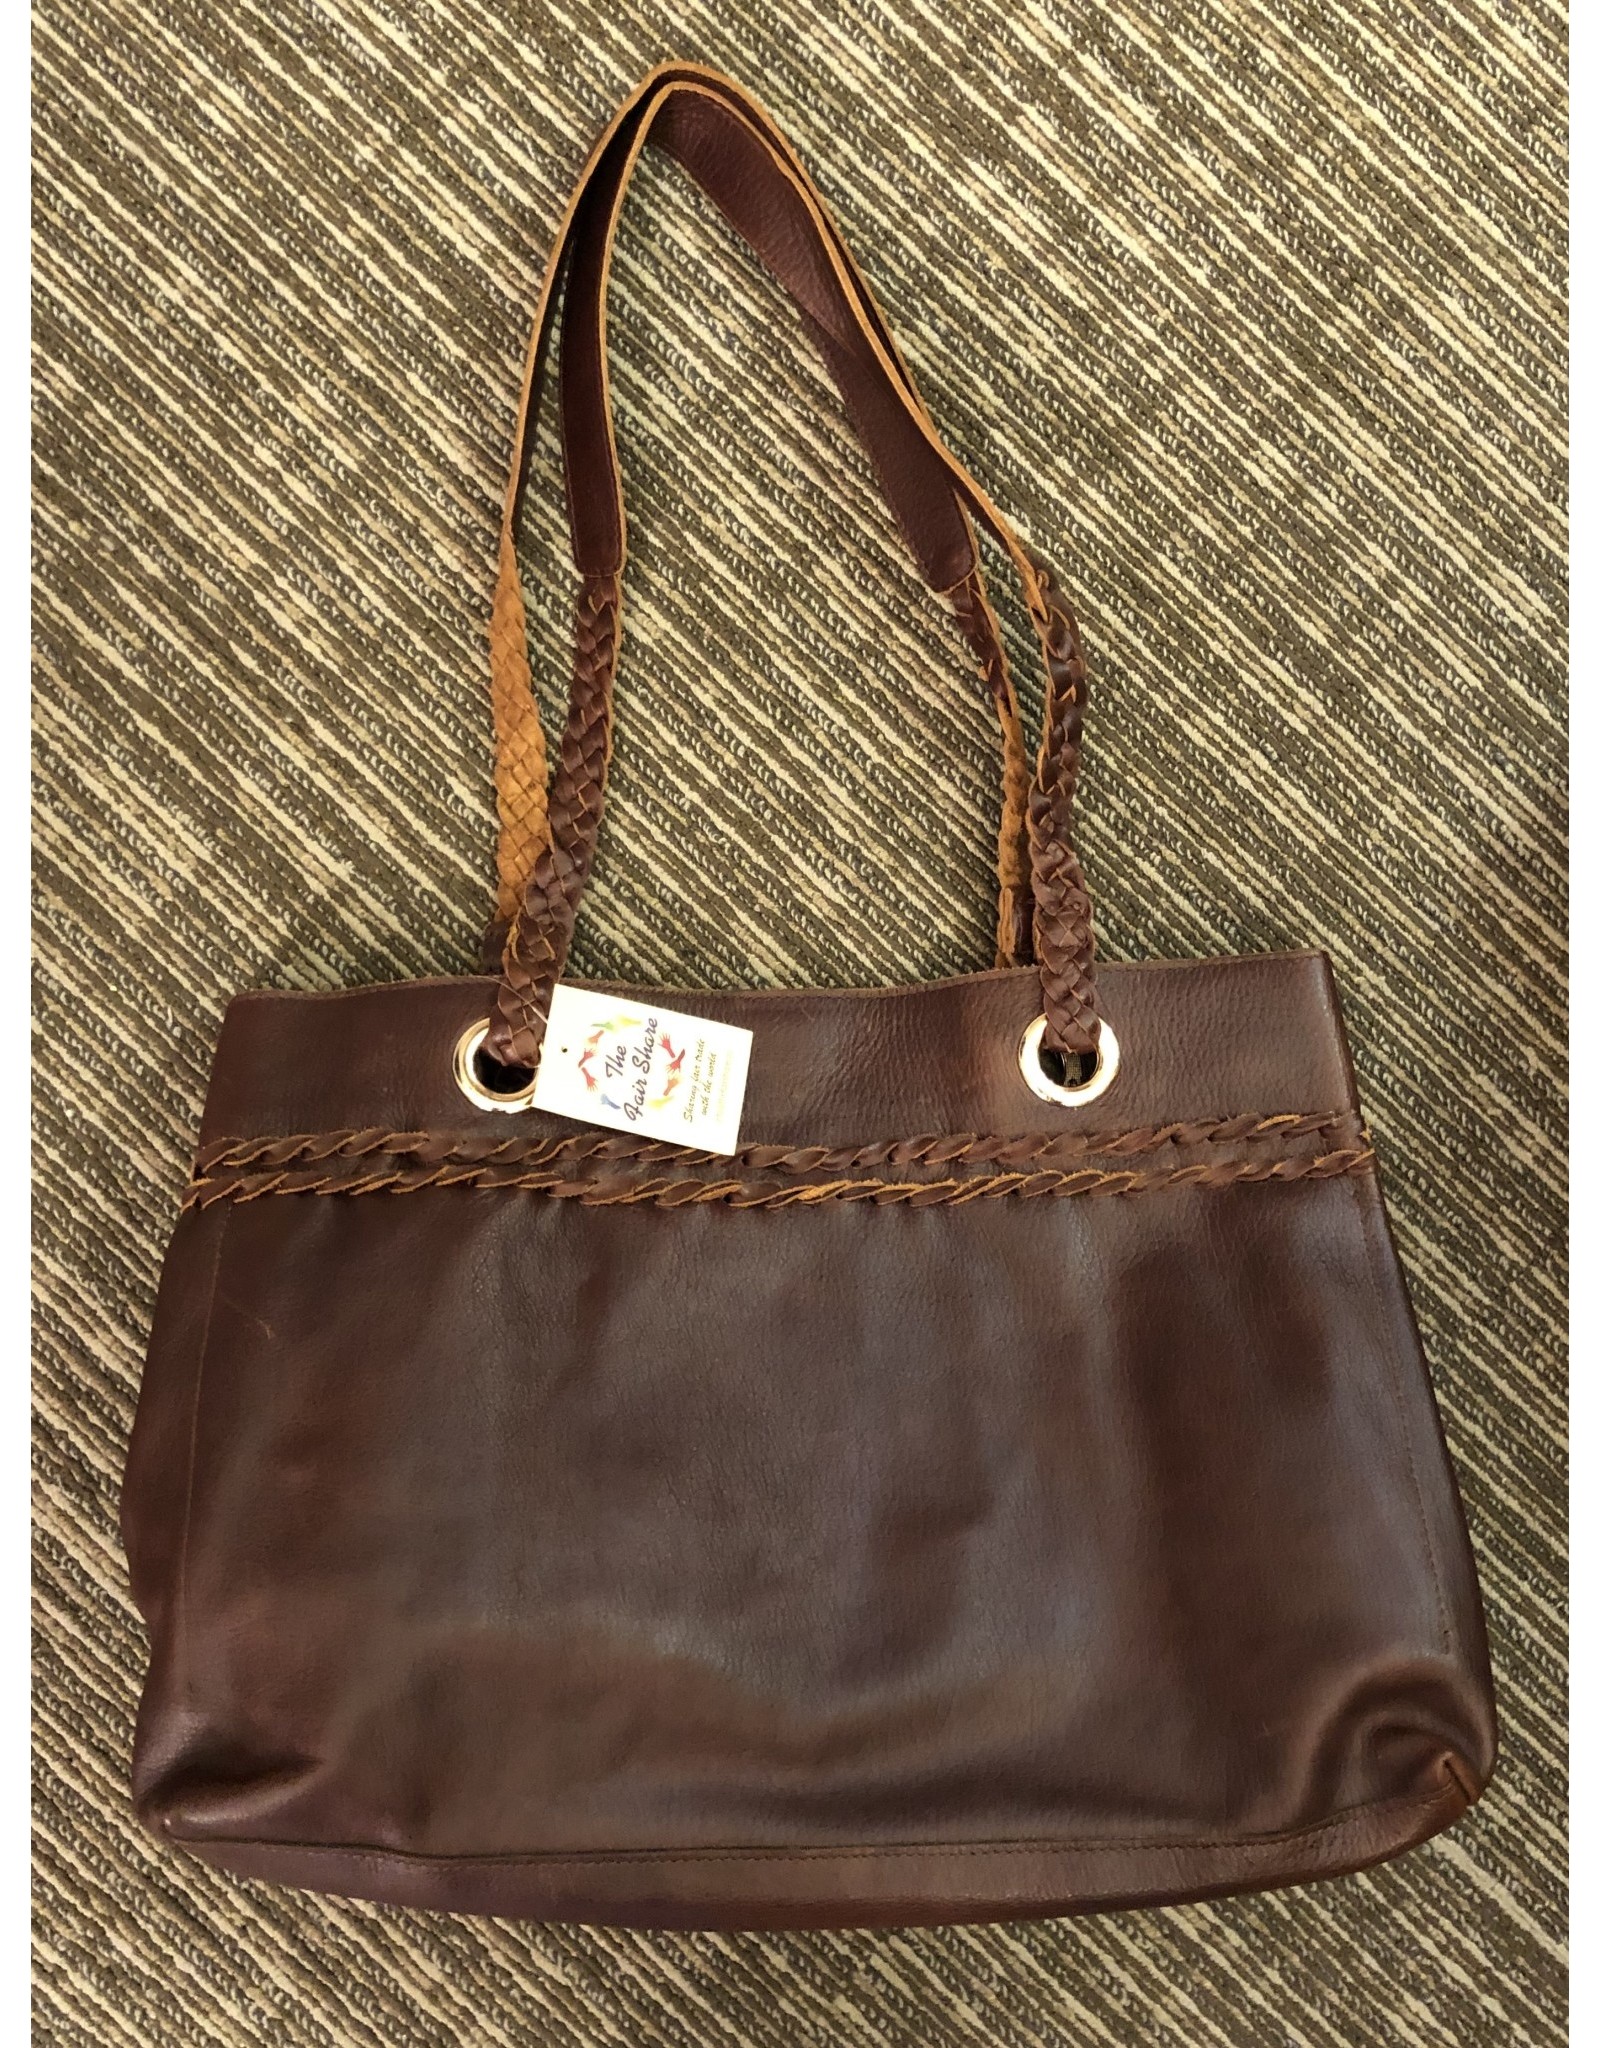 Handmade Fair Trade Leather Bags